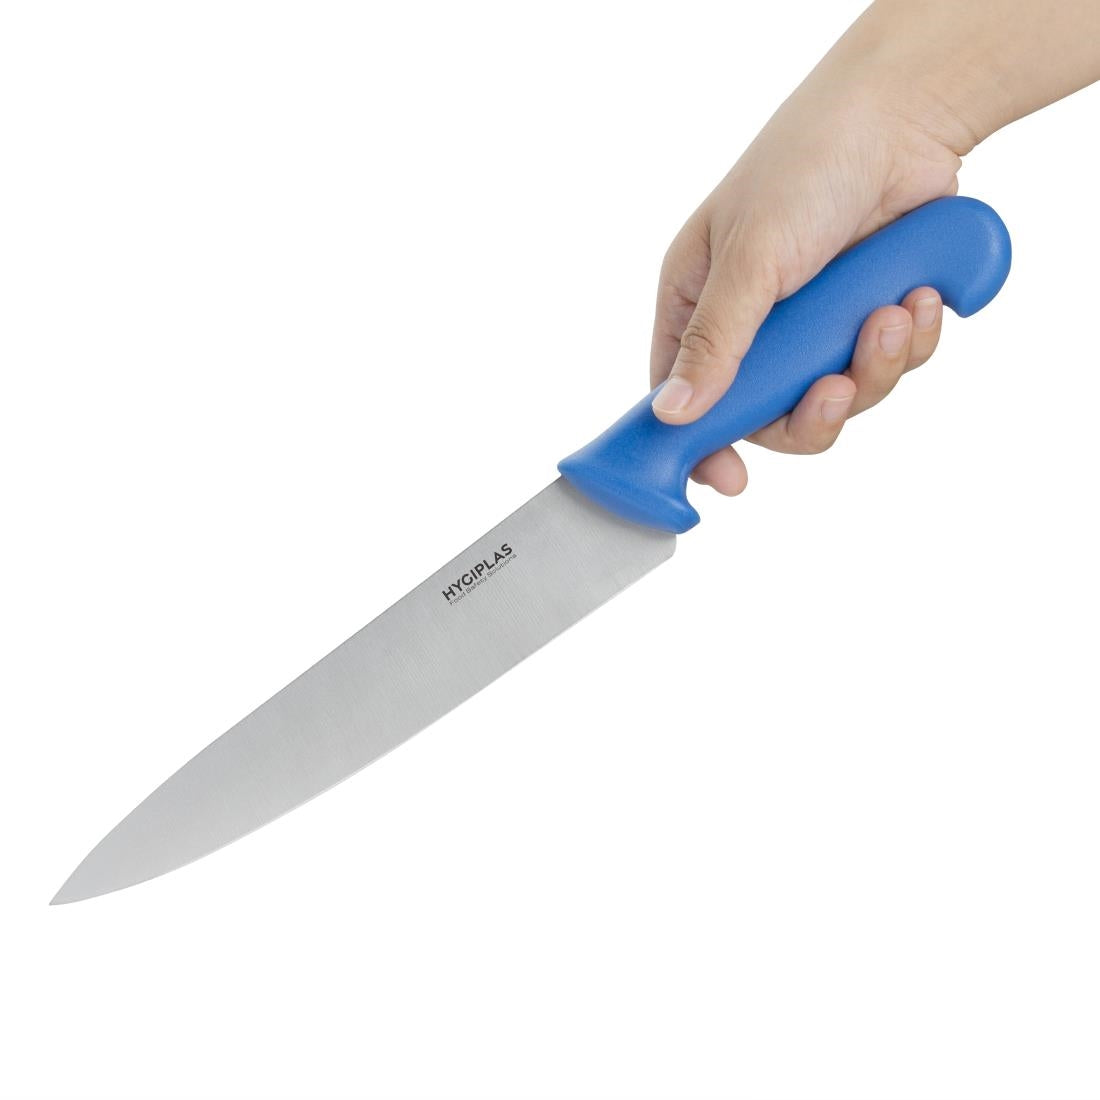 C851 Hygiplas Chefs Knife Blue 21.5cm JD Catering Equipment Solutions Ltd